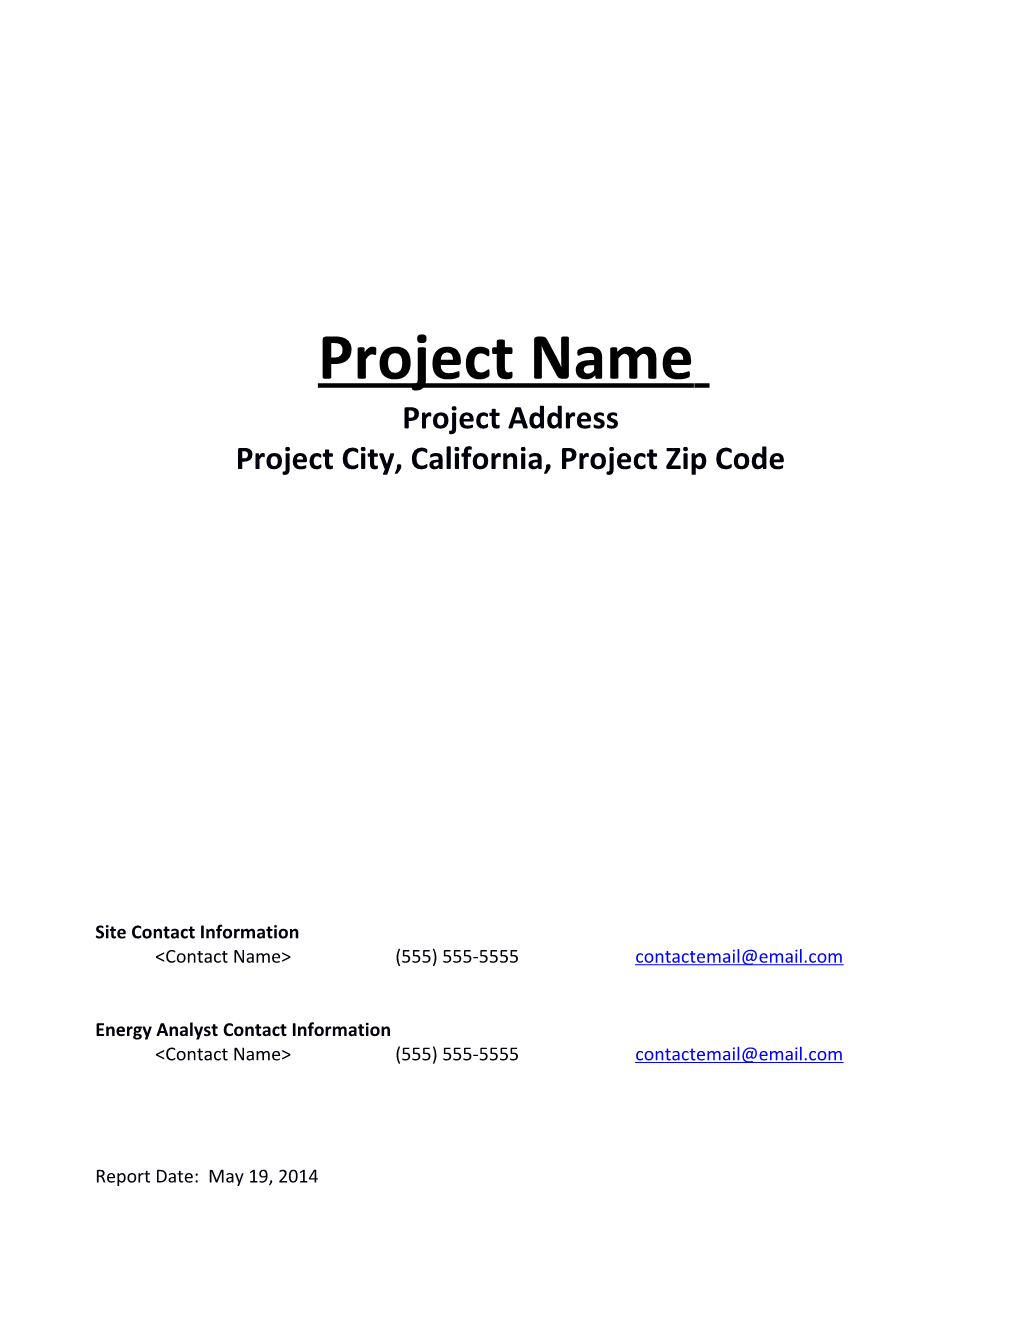 Project City, California, Project Zip Code